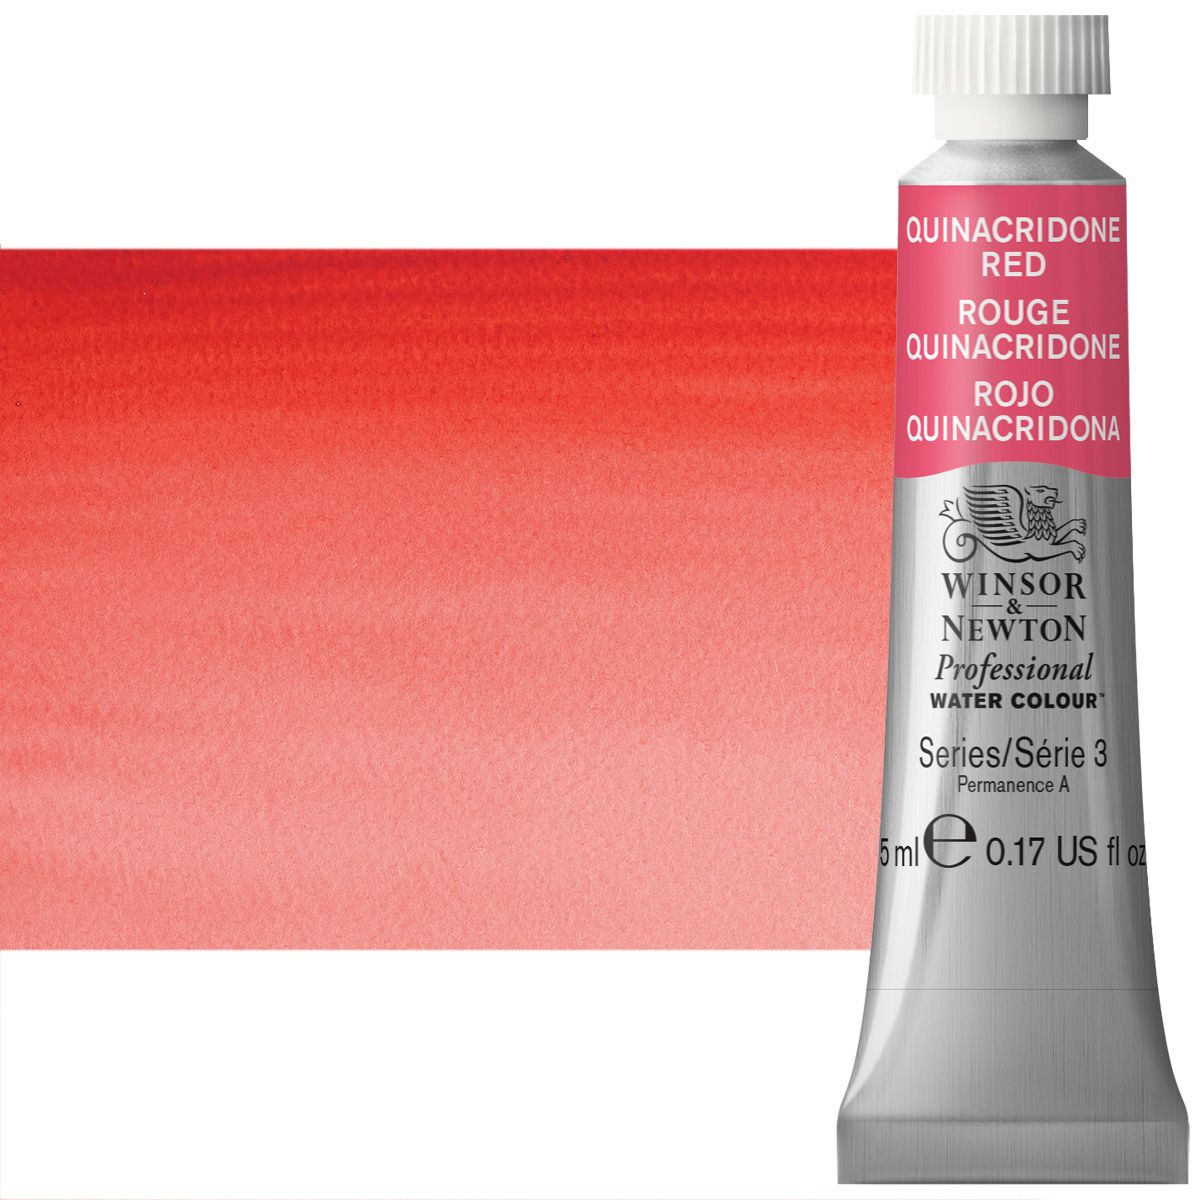 Winsor & Newton Professional Watercolor - Quinacridone Red, 5ml Tube